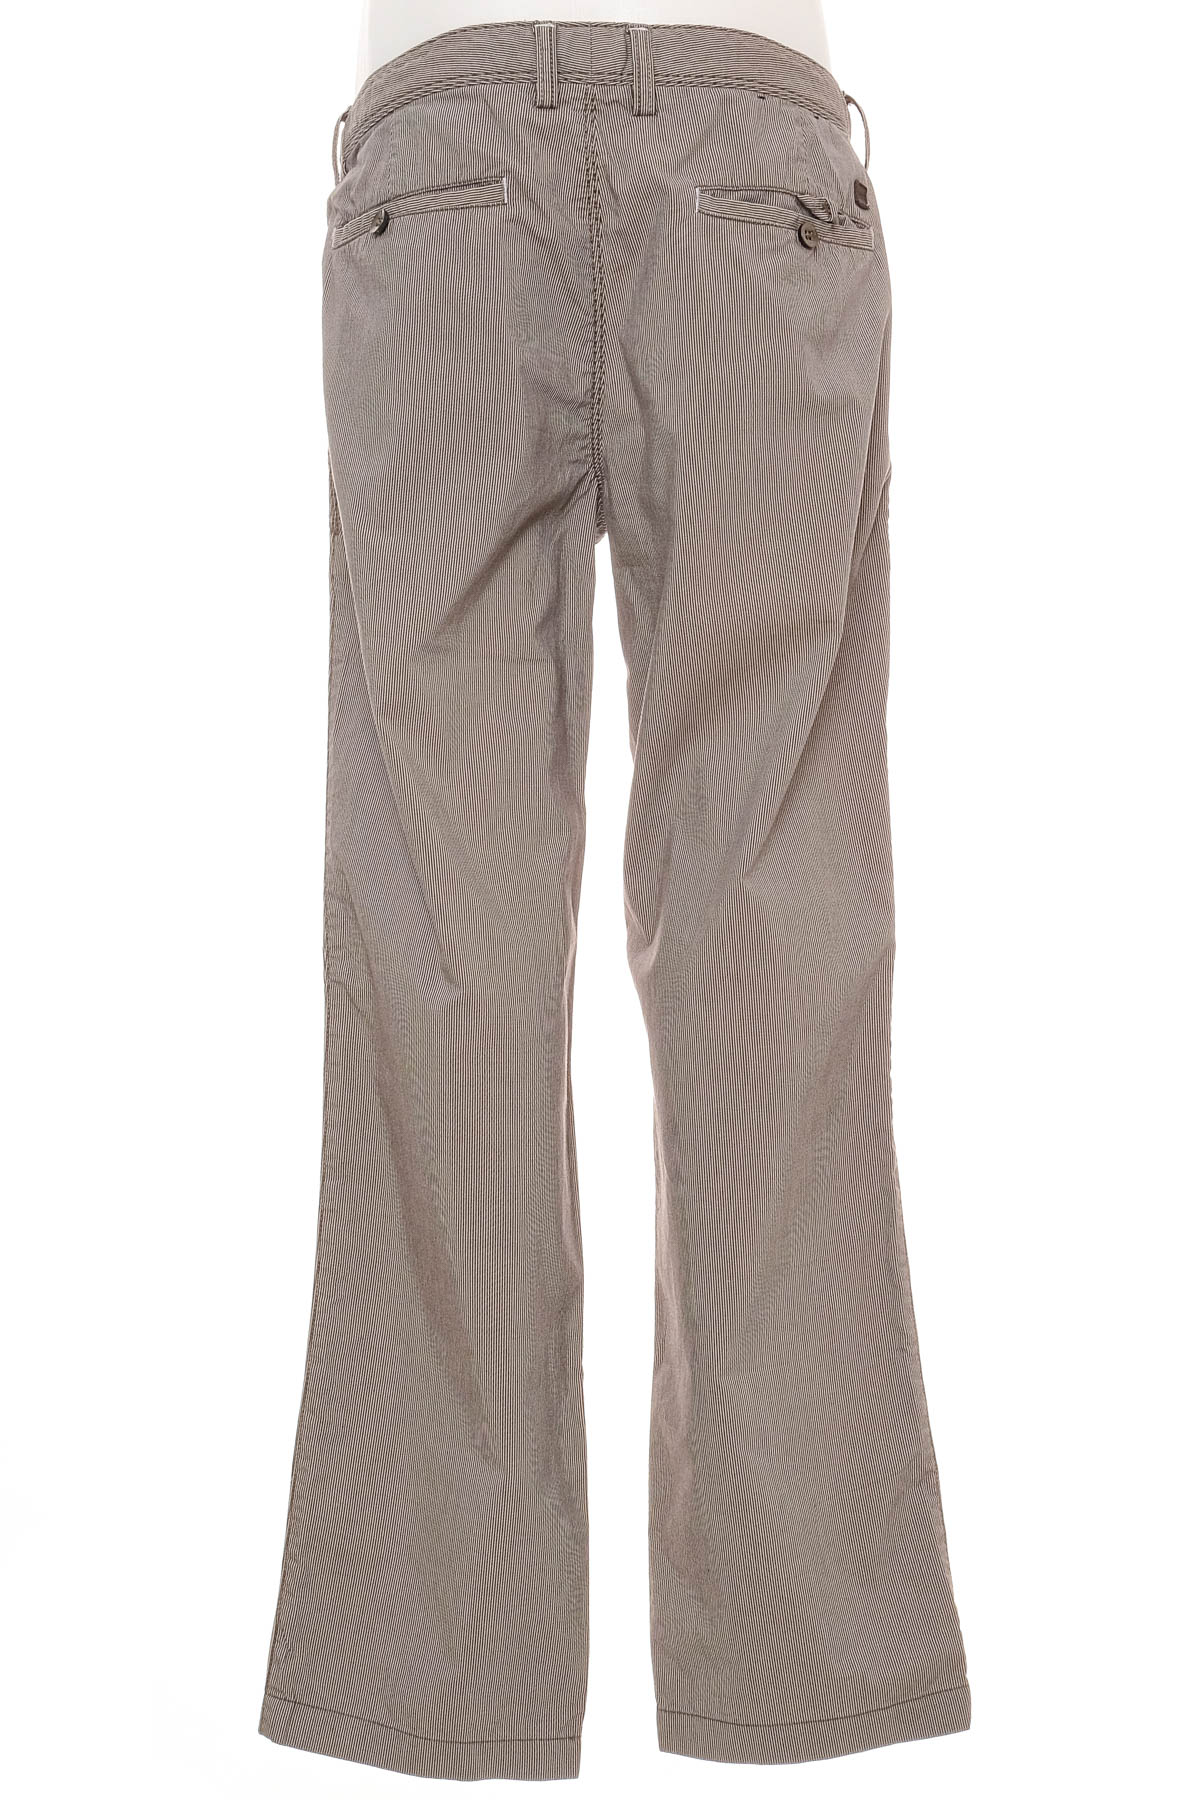 Pantalon pentru bărbați - HUGO BOSS - 1